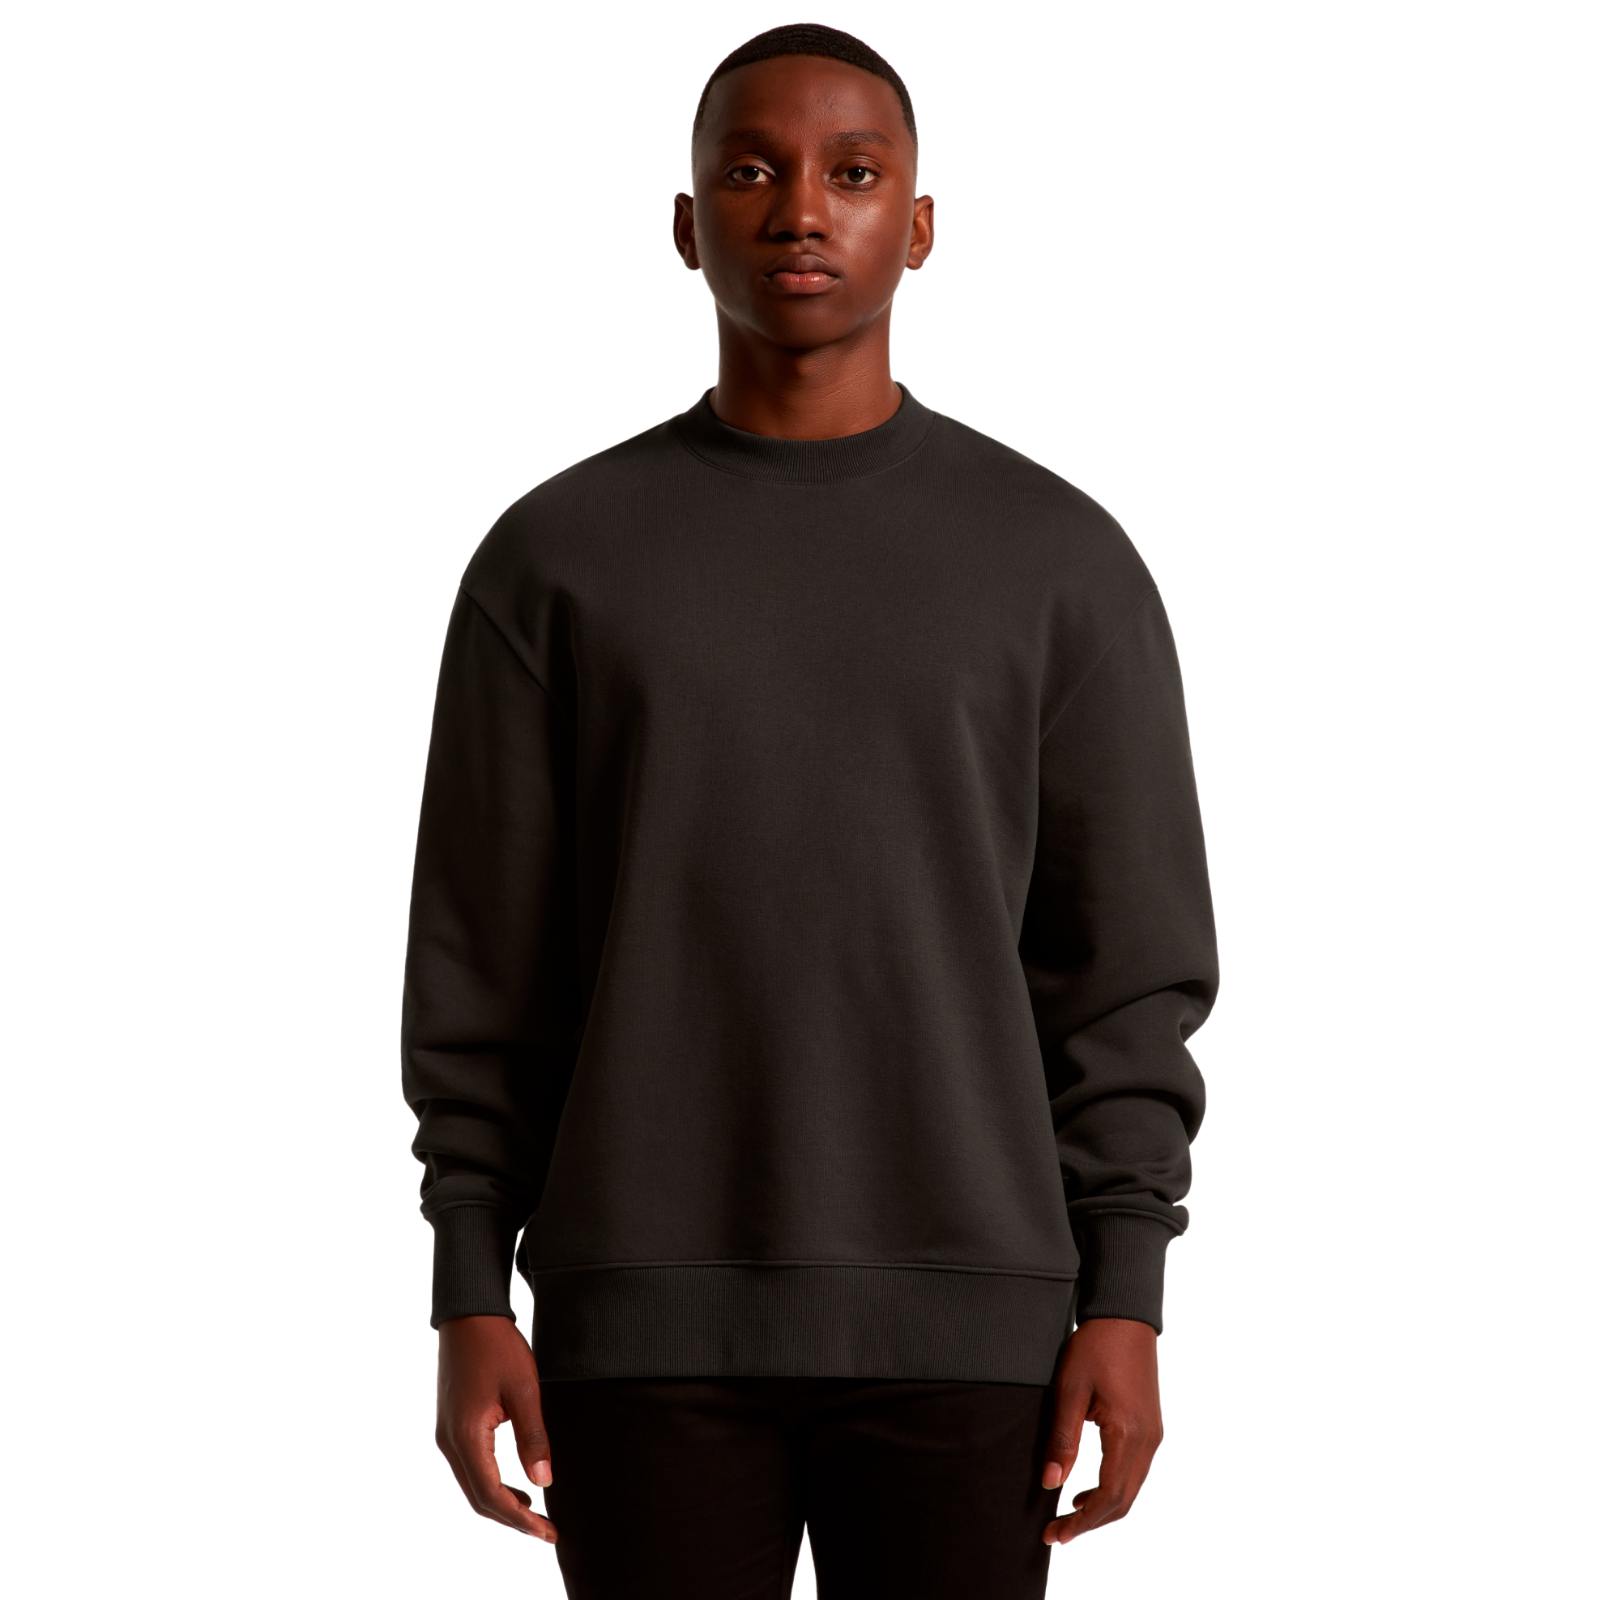 AS Colour model wearing the custom heavy sweater in coal